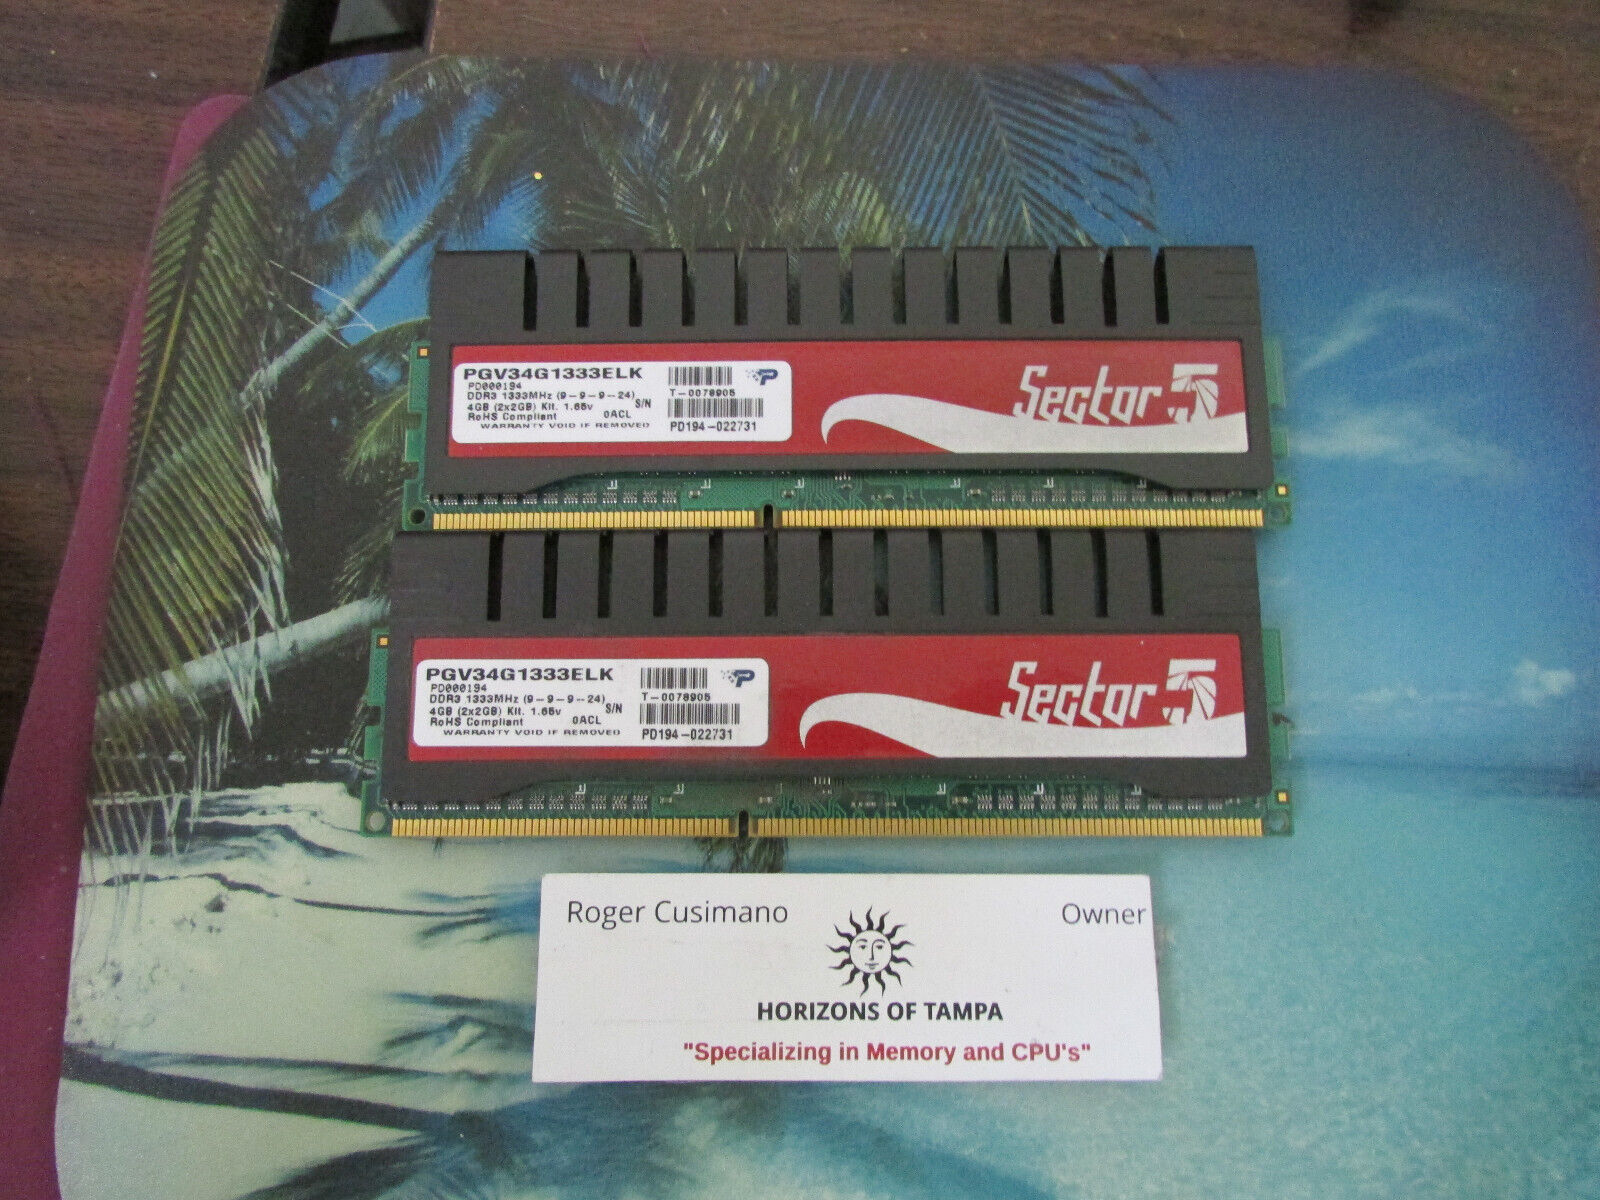 Pair of Patriot Sector 5 4GB (2x2GB) DDR3 1333Mhz RAM Kit - PGV34G1333ELK